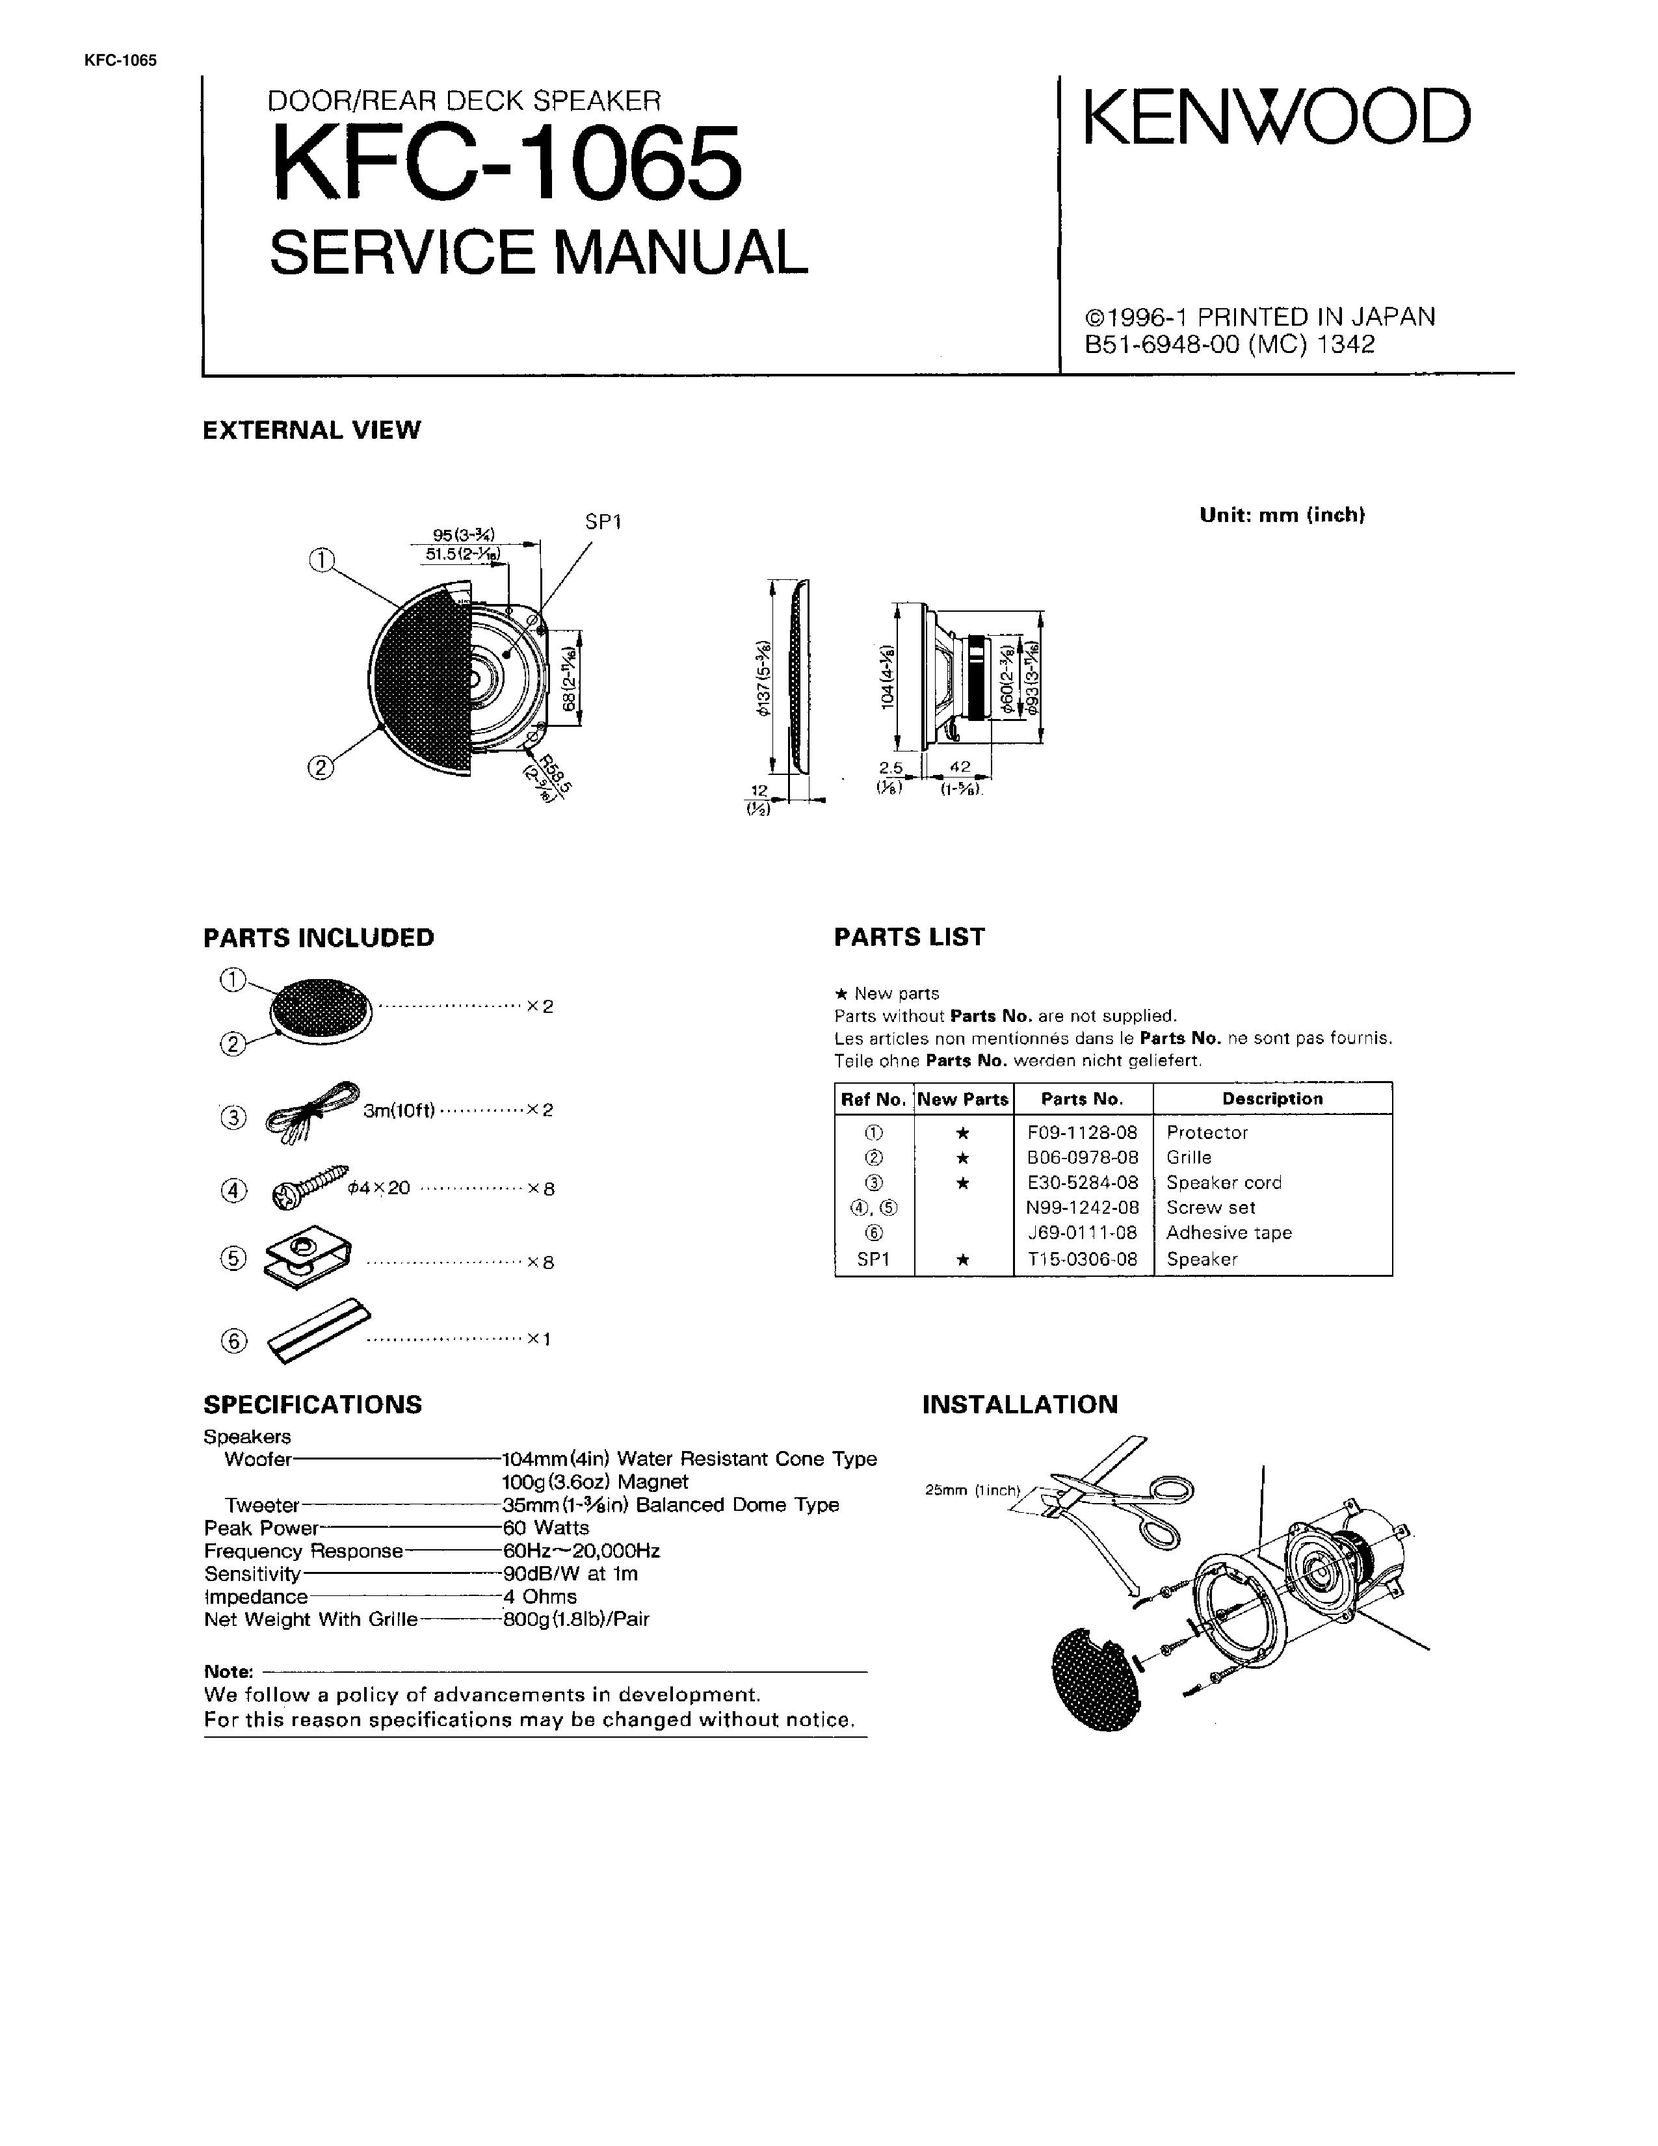 Kenwood KFC-1065 Car Speaker User Manual